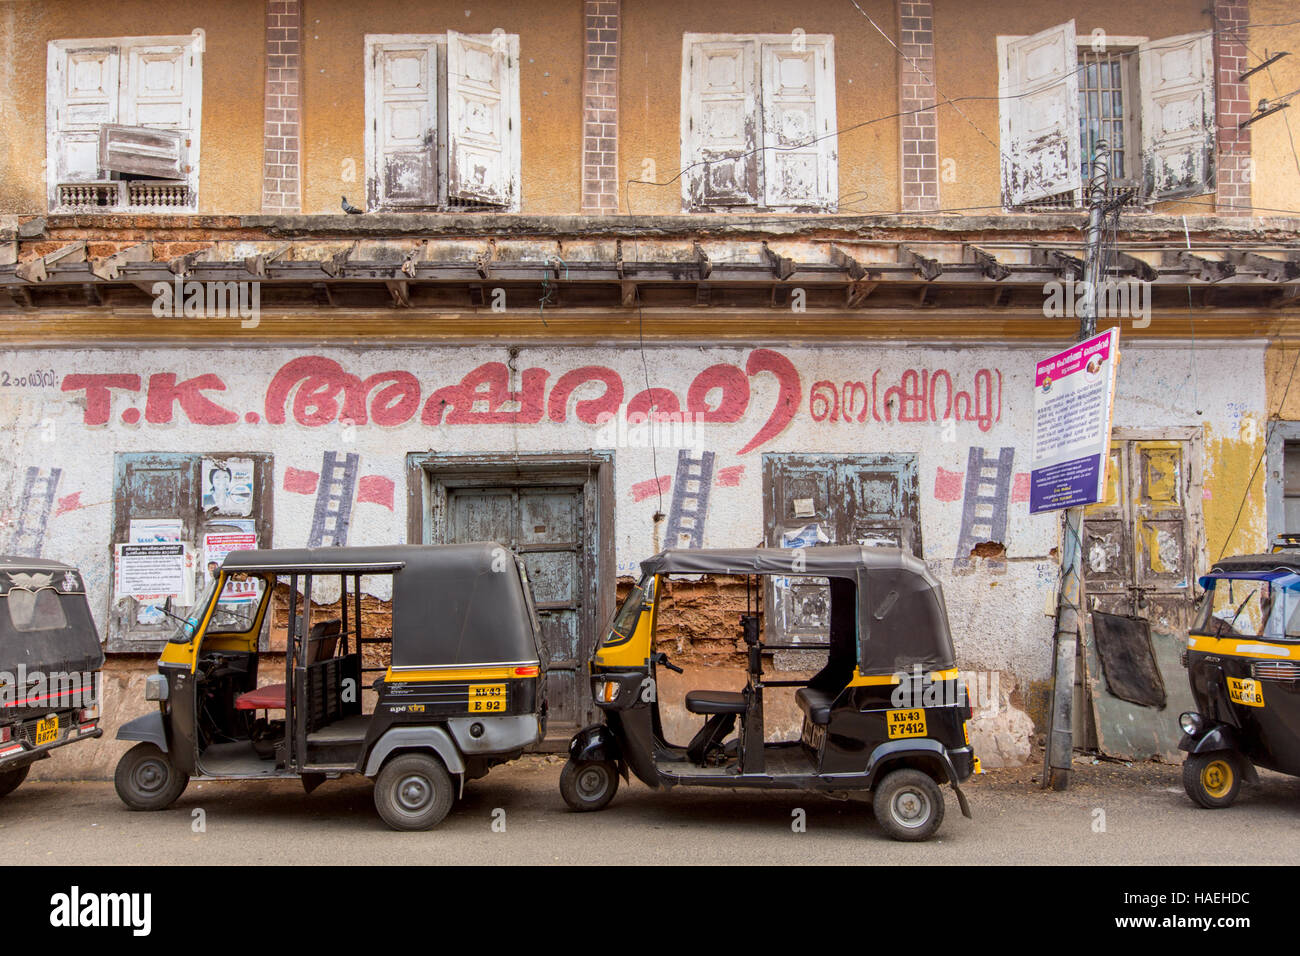 Auto rickshaw stand Stock Photo